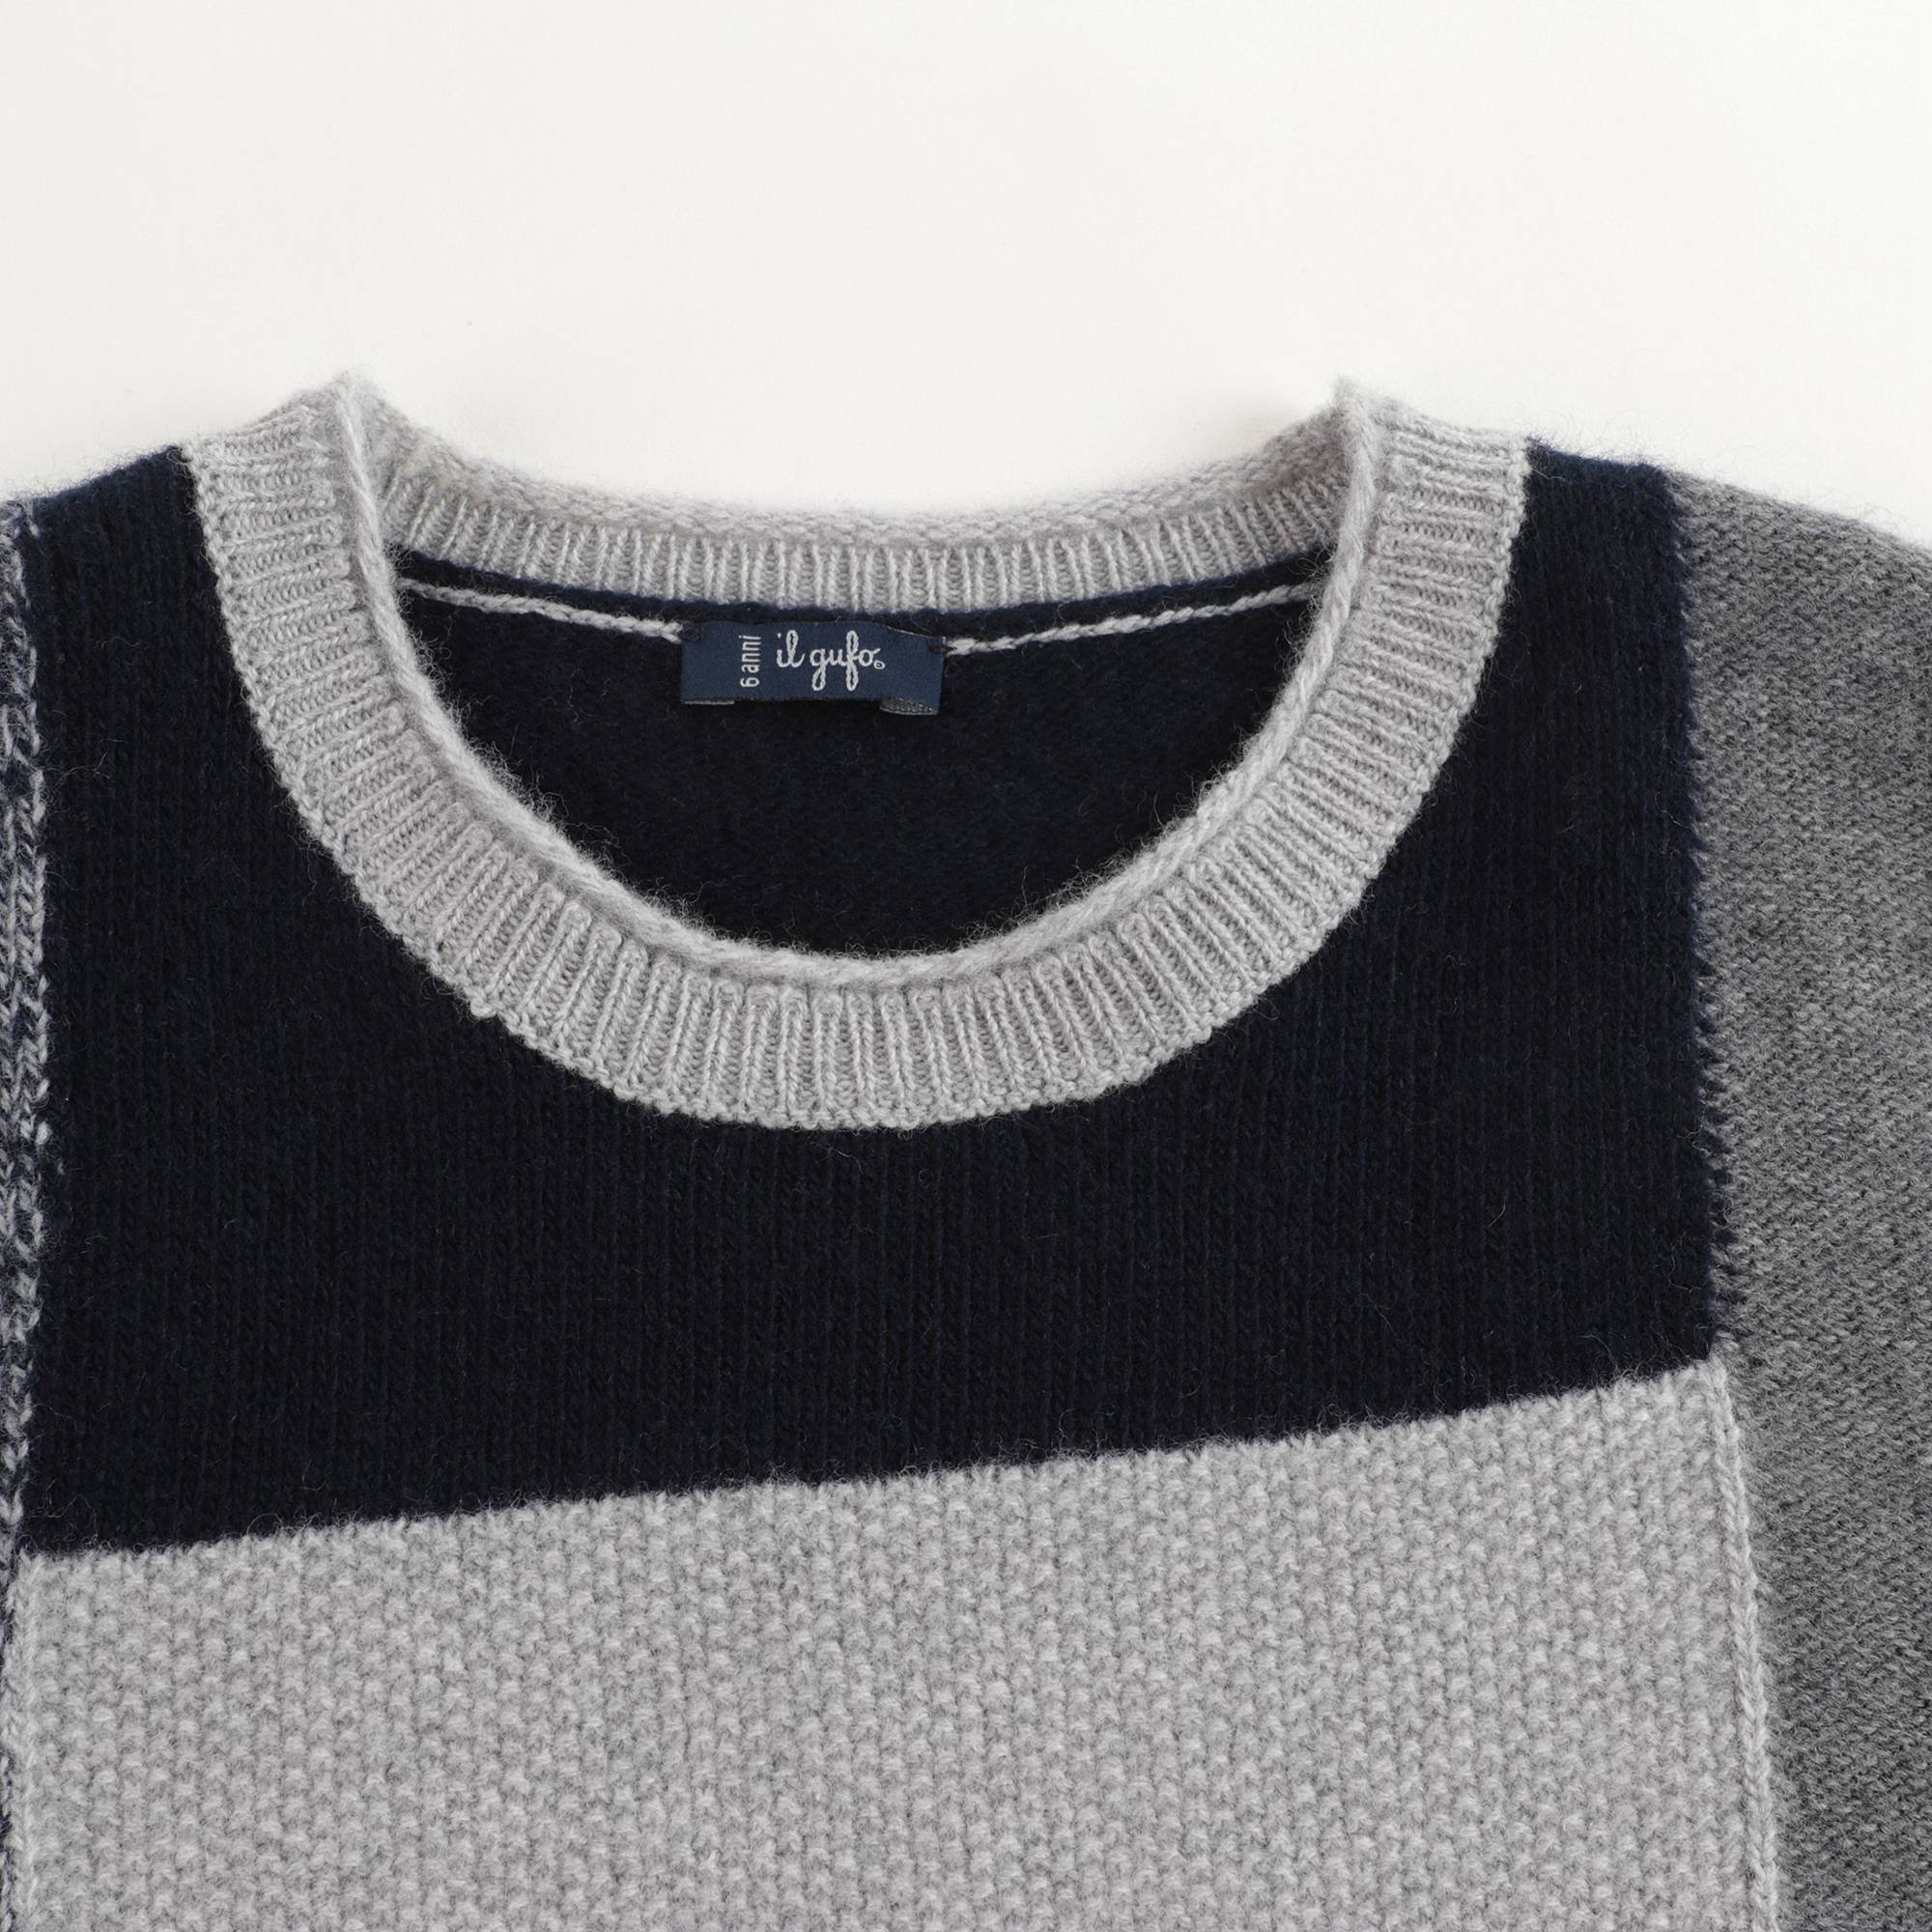 Boys Grey Wool Sweater